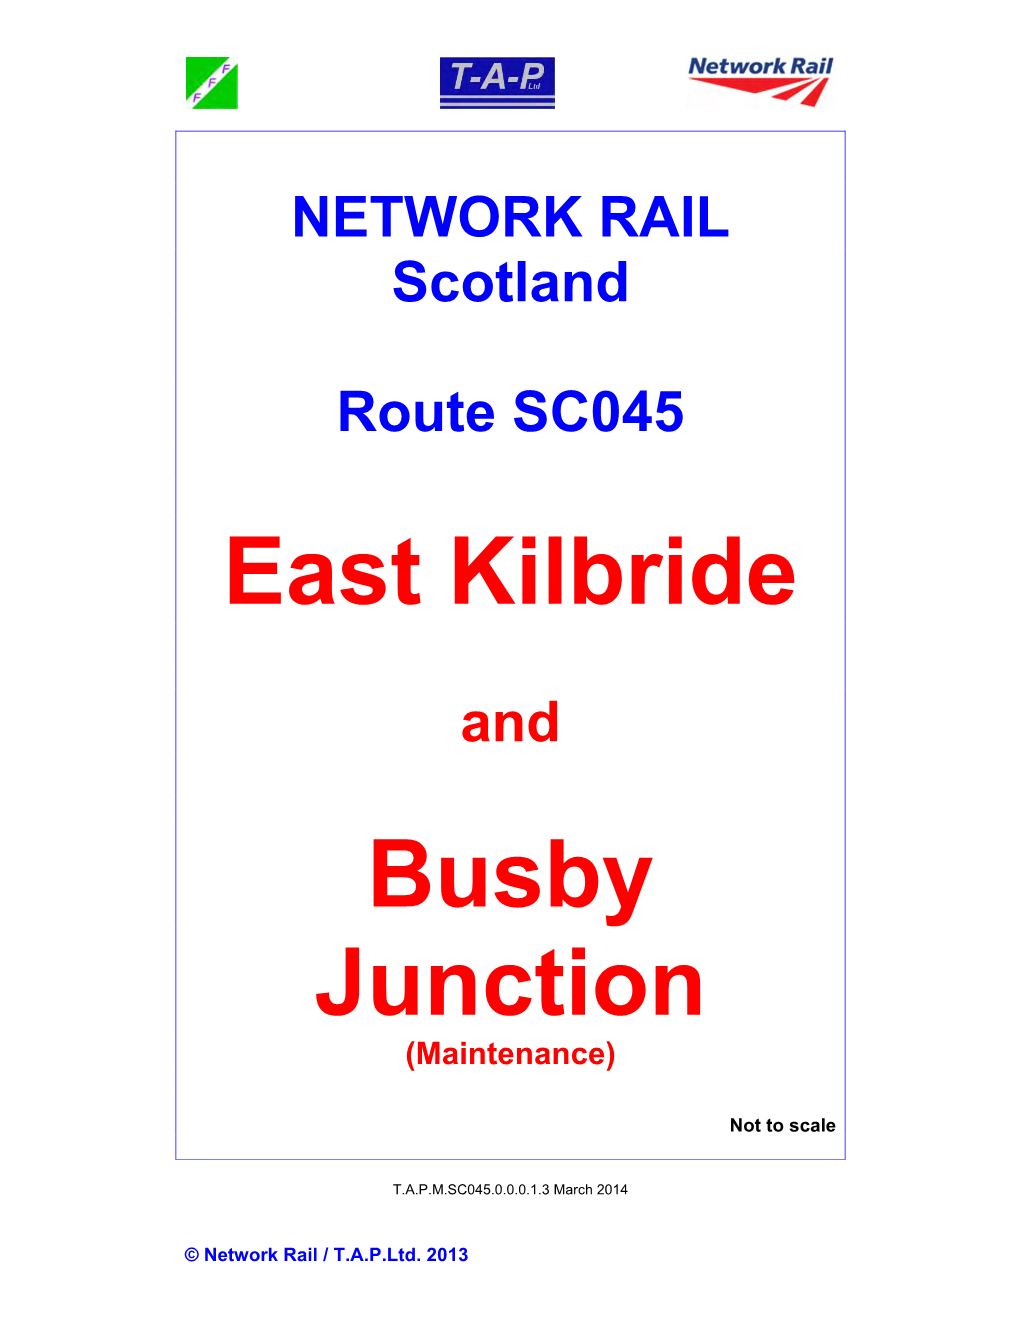 East Kilbride Busby Junction Platform 1 Busby Road P Clarkston Station 2